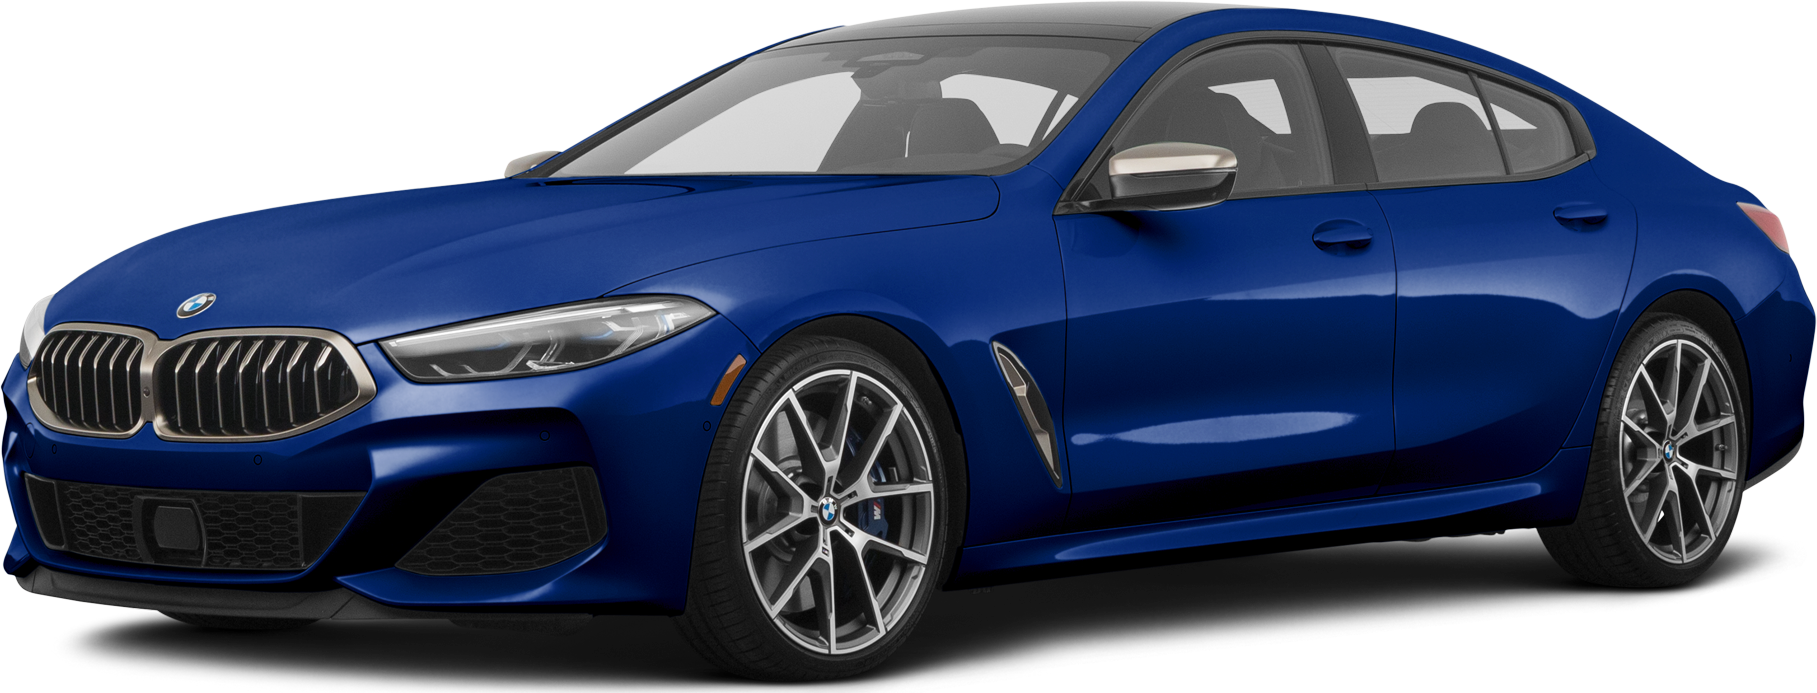 2022 BMW 8 Series Reviews, Pricing & Specs | Kelley Blue Book